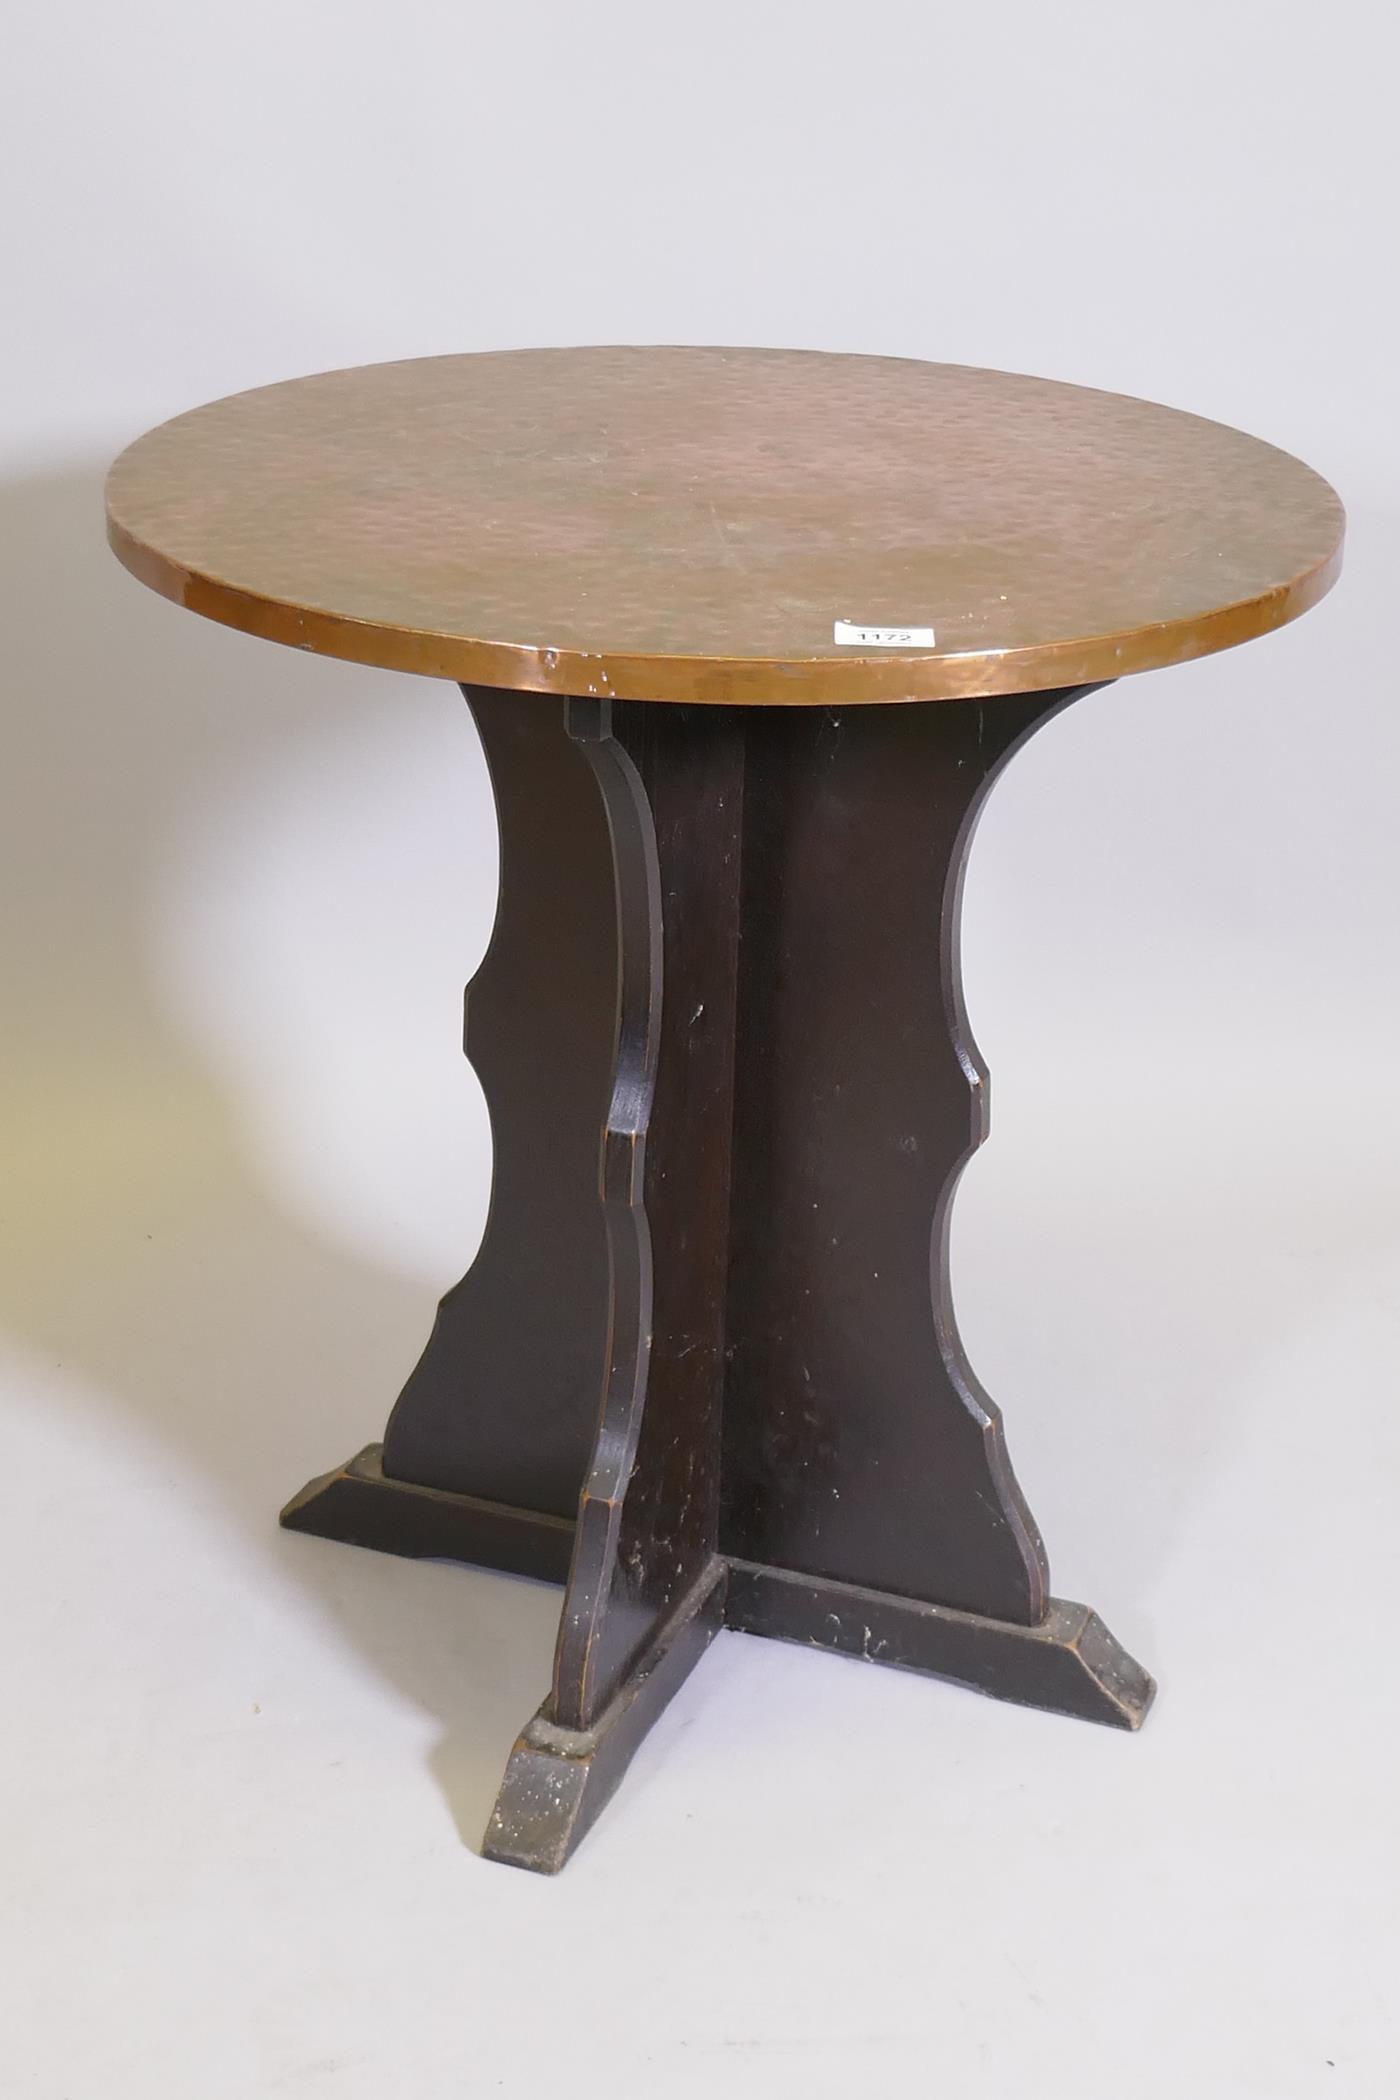 A copper top pub/occasional table, 22" diameter